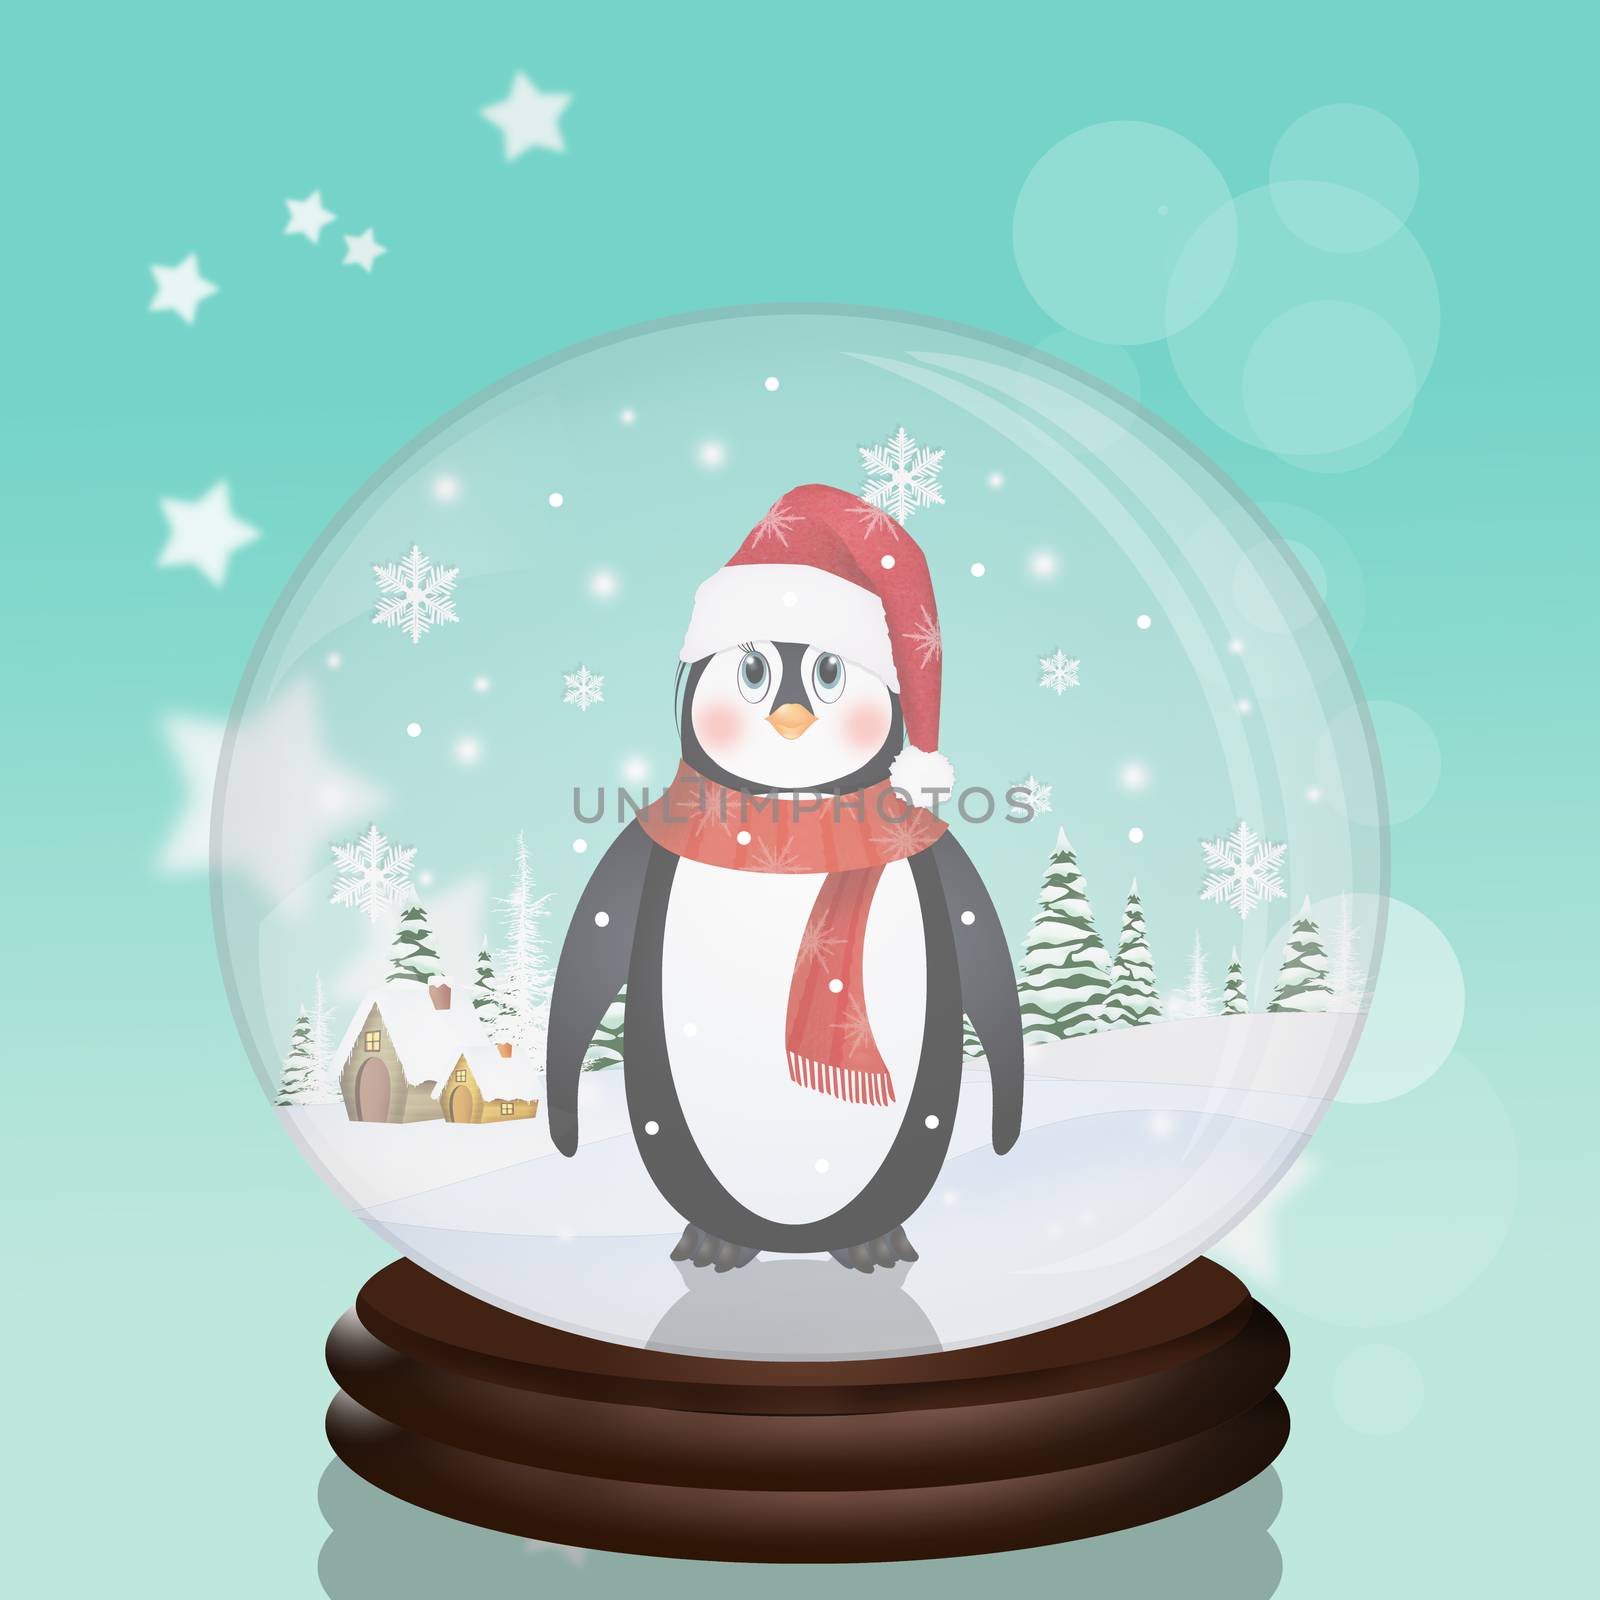 crystal ball for Christmas by adrenalina